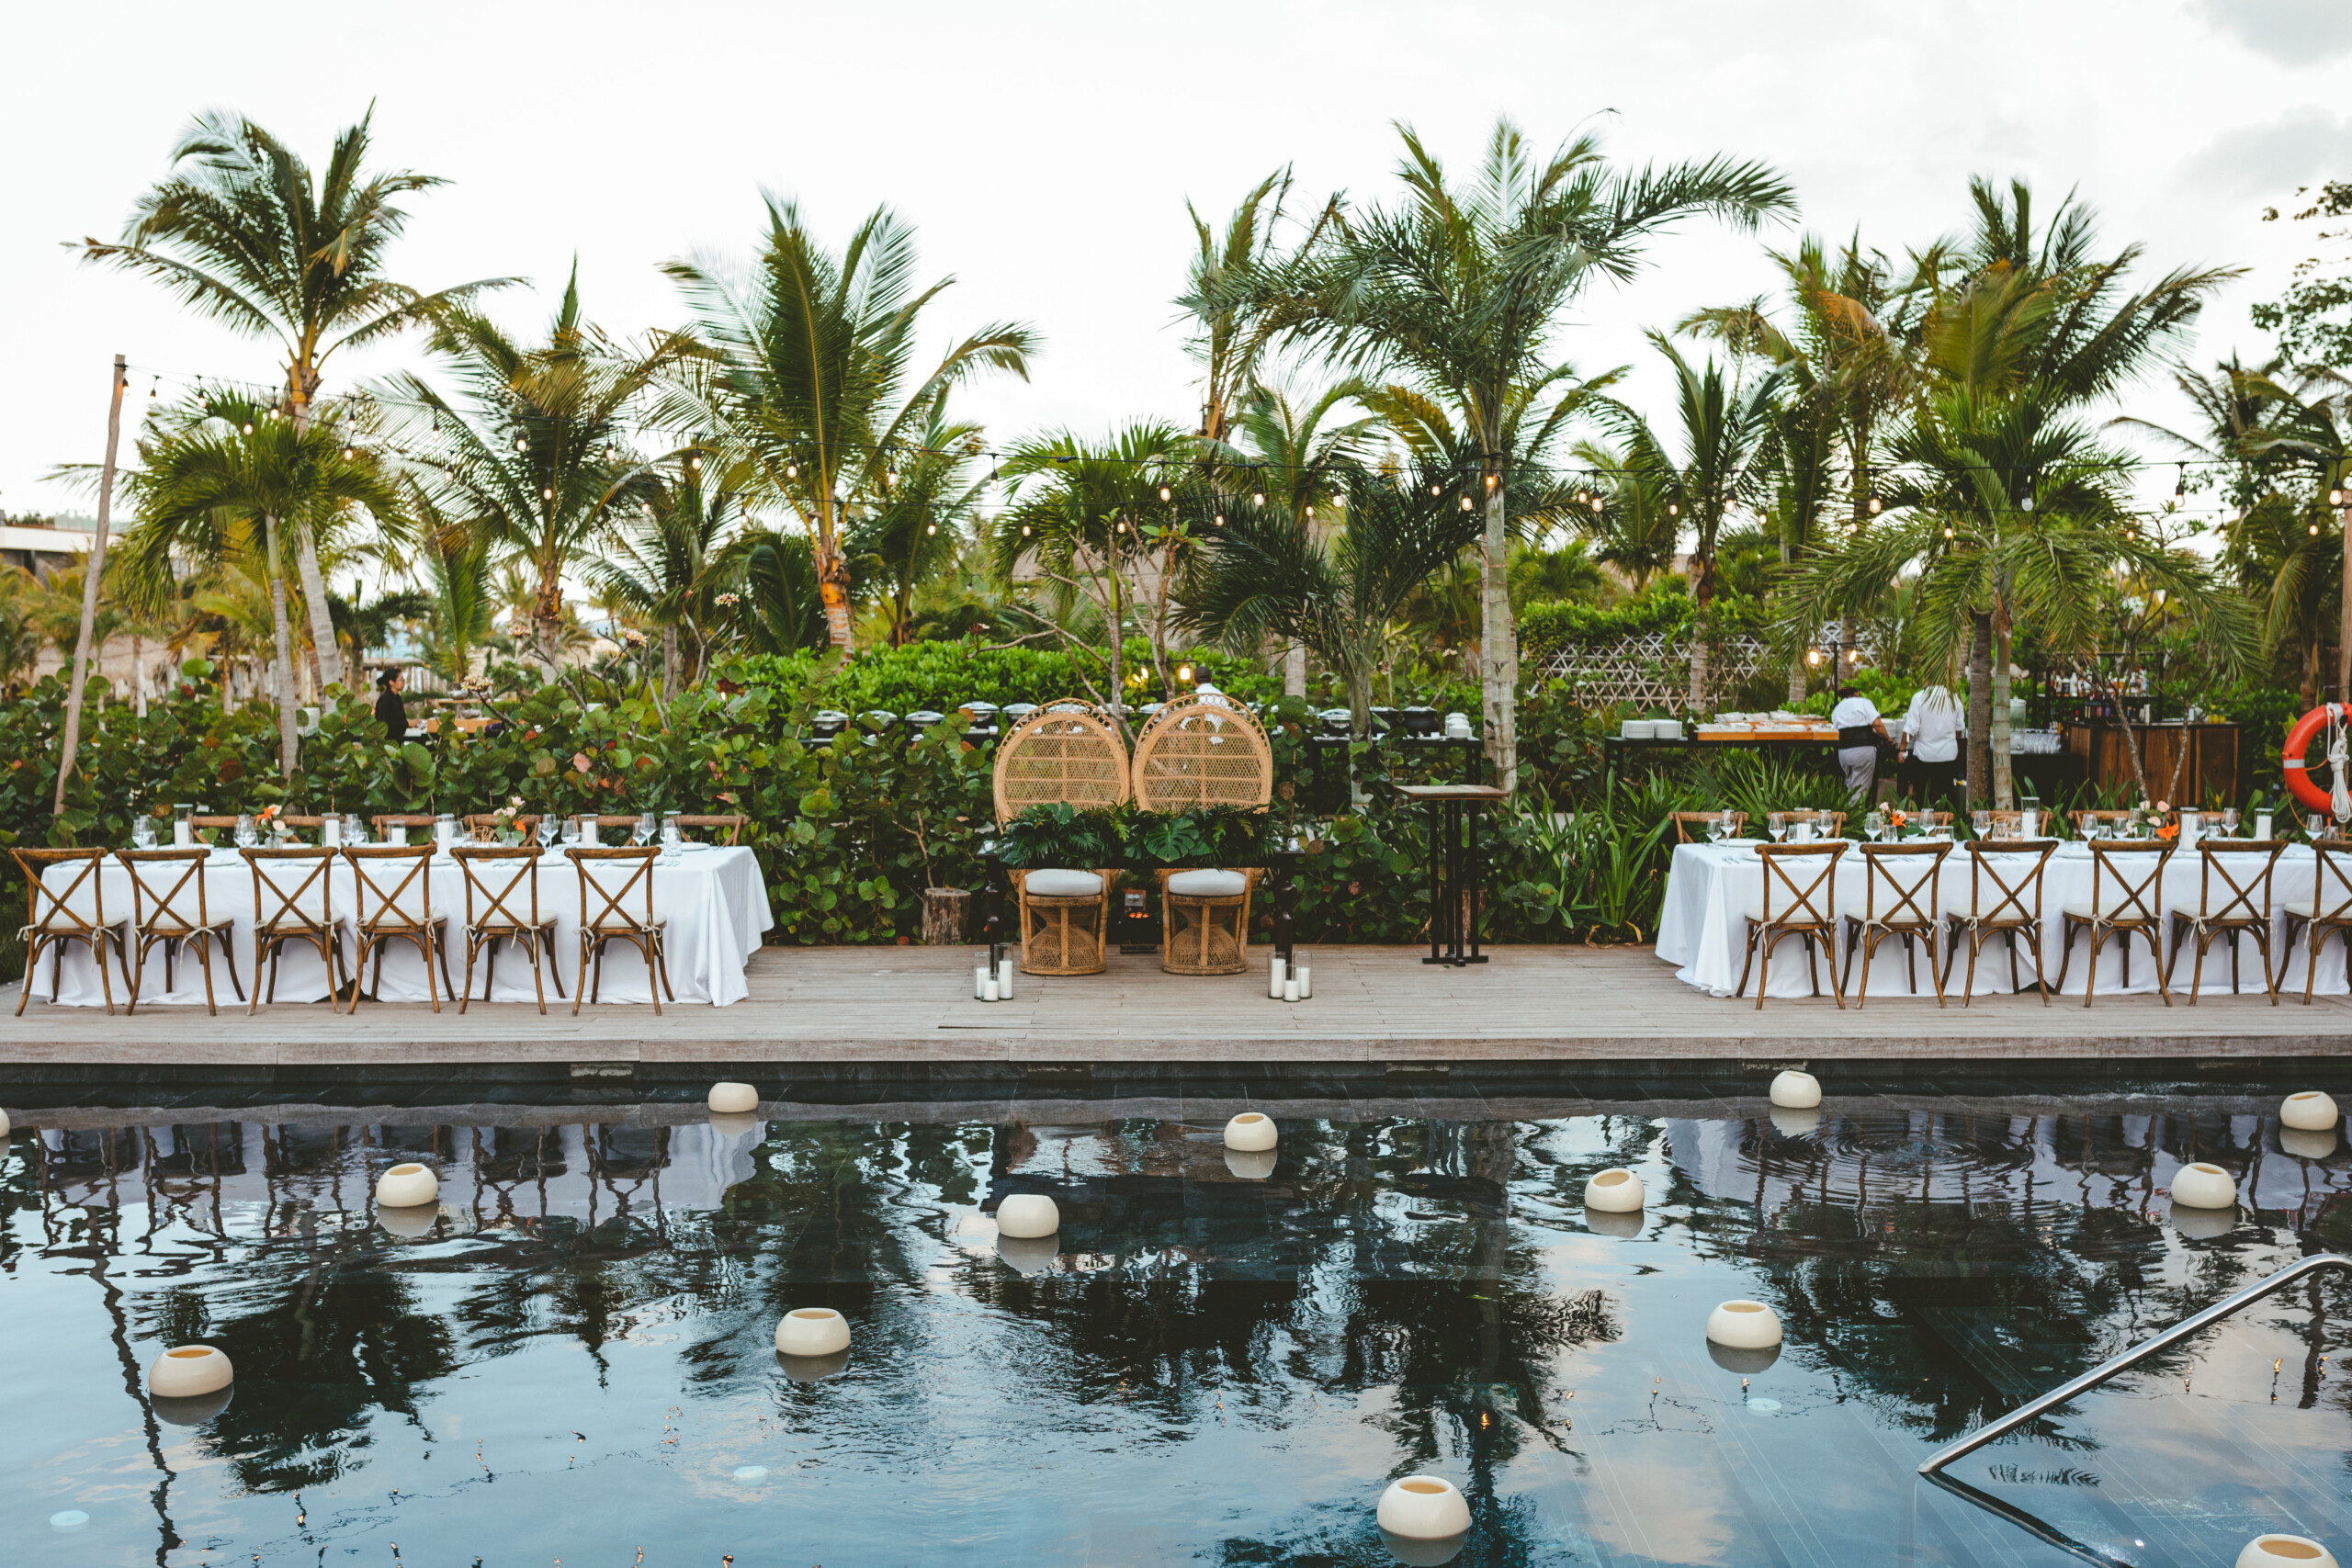 Secrets Moxche poolside wedding venue for destination wedding in mexico